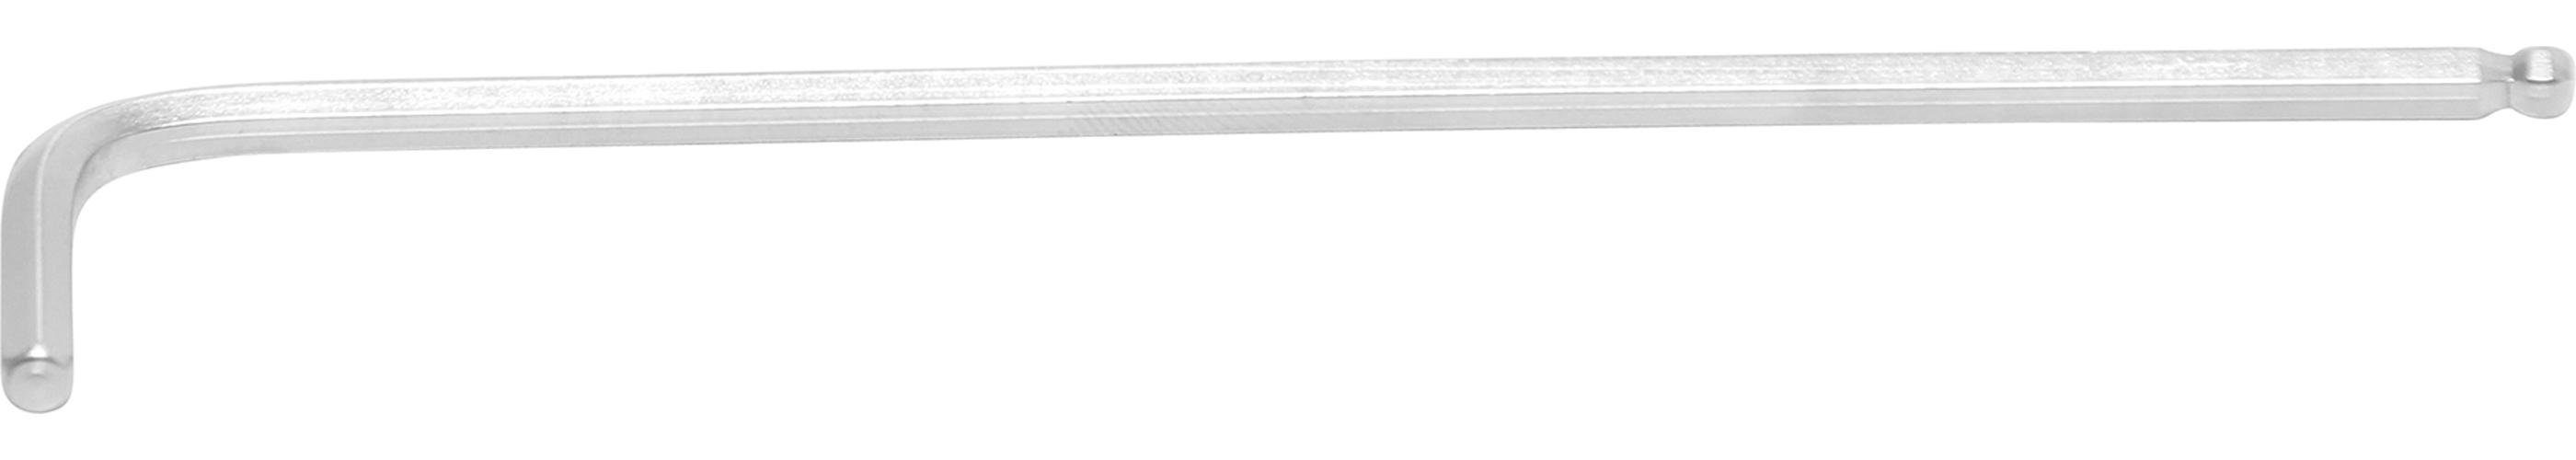 BGS technic Bit-Schraubendreher Winkelschlüssel, extra lang, Innensechskant / Innensechskant mit Kugelkopf 4 mm